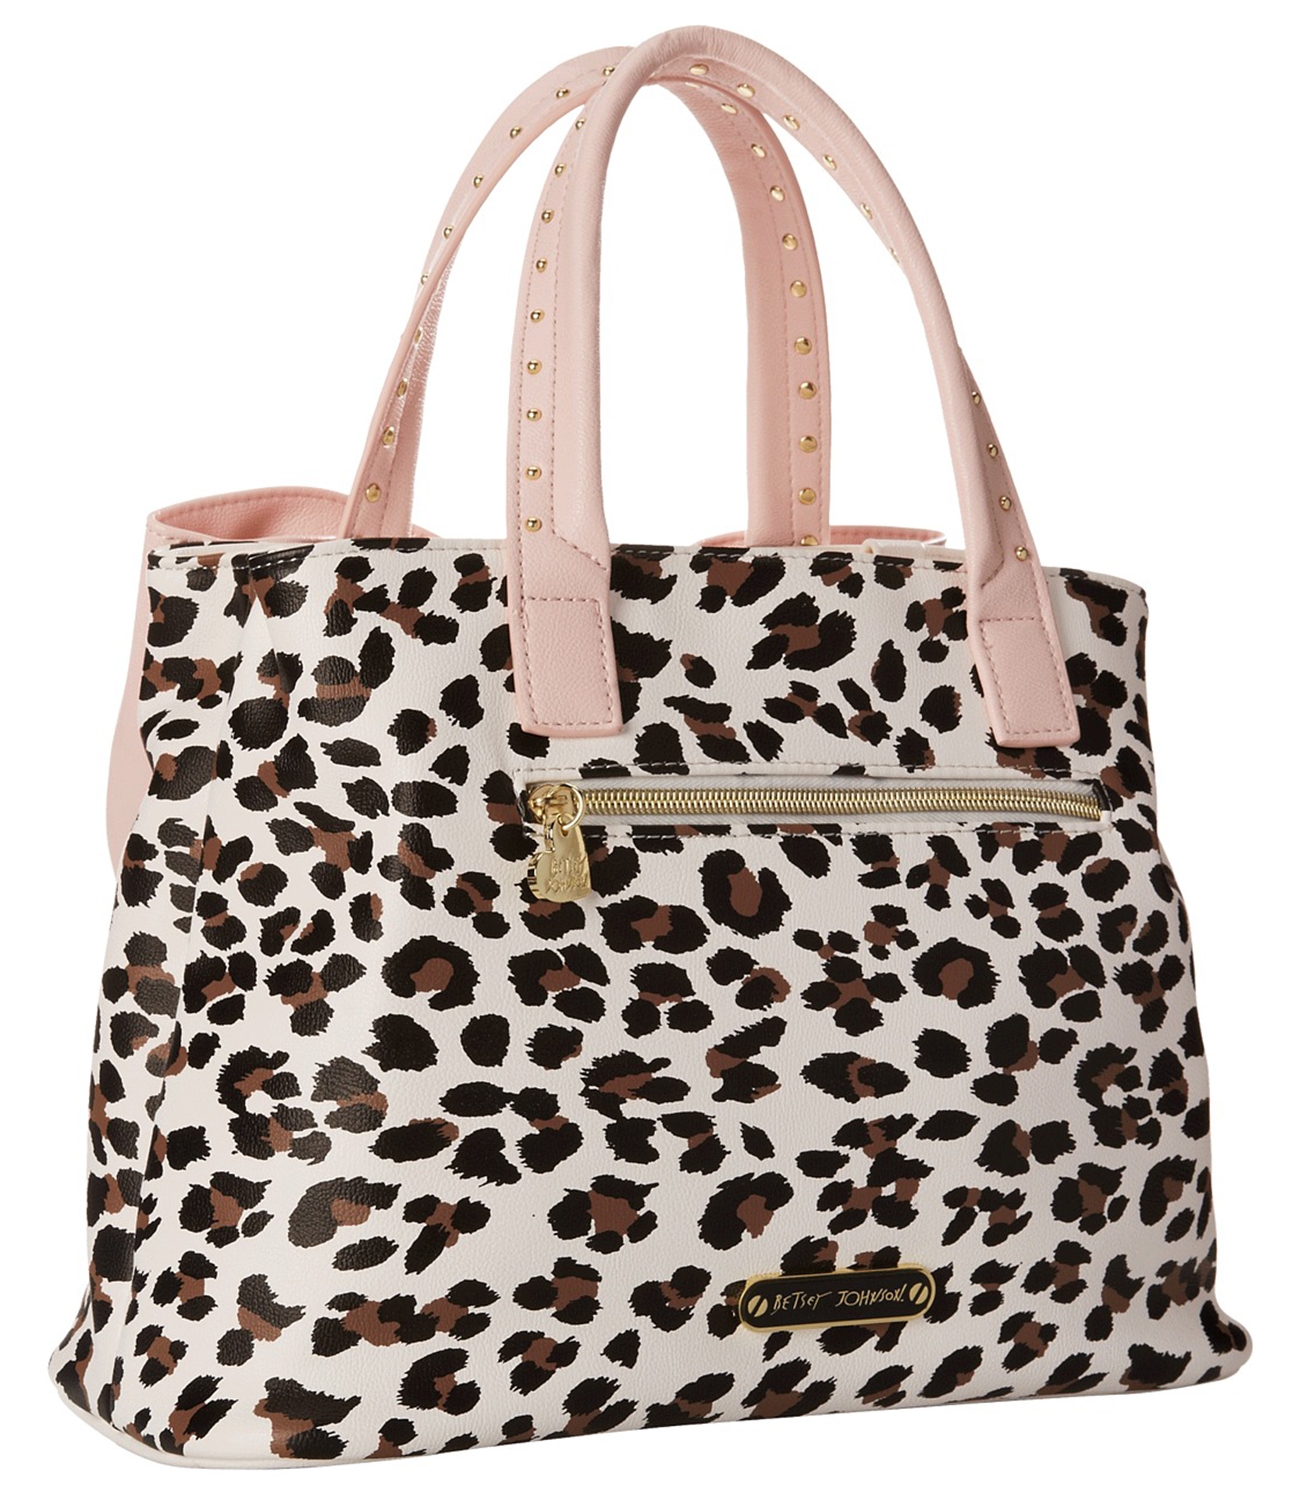 Betsey Johnson Bow Tie Shopper Tote Bag - Leopard | eBay